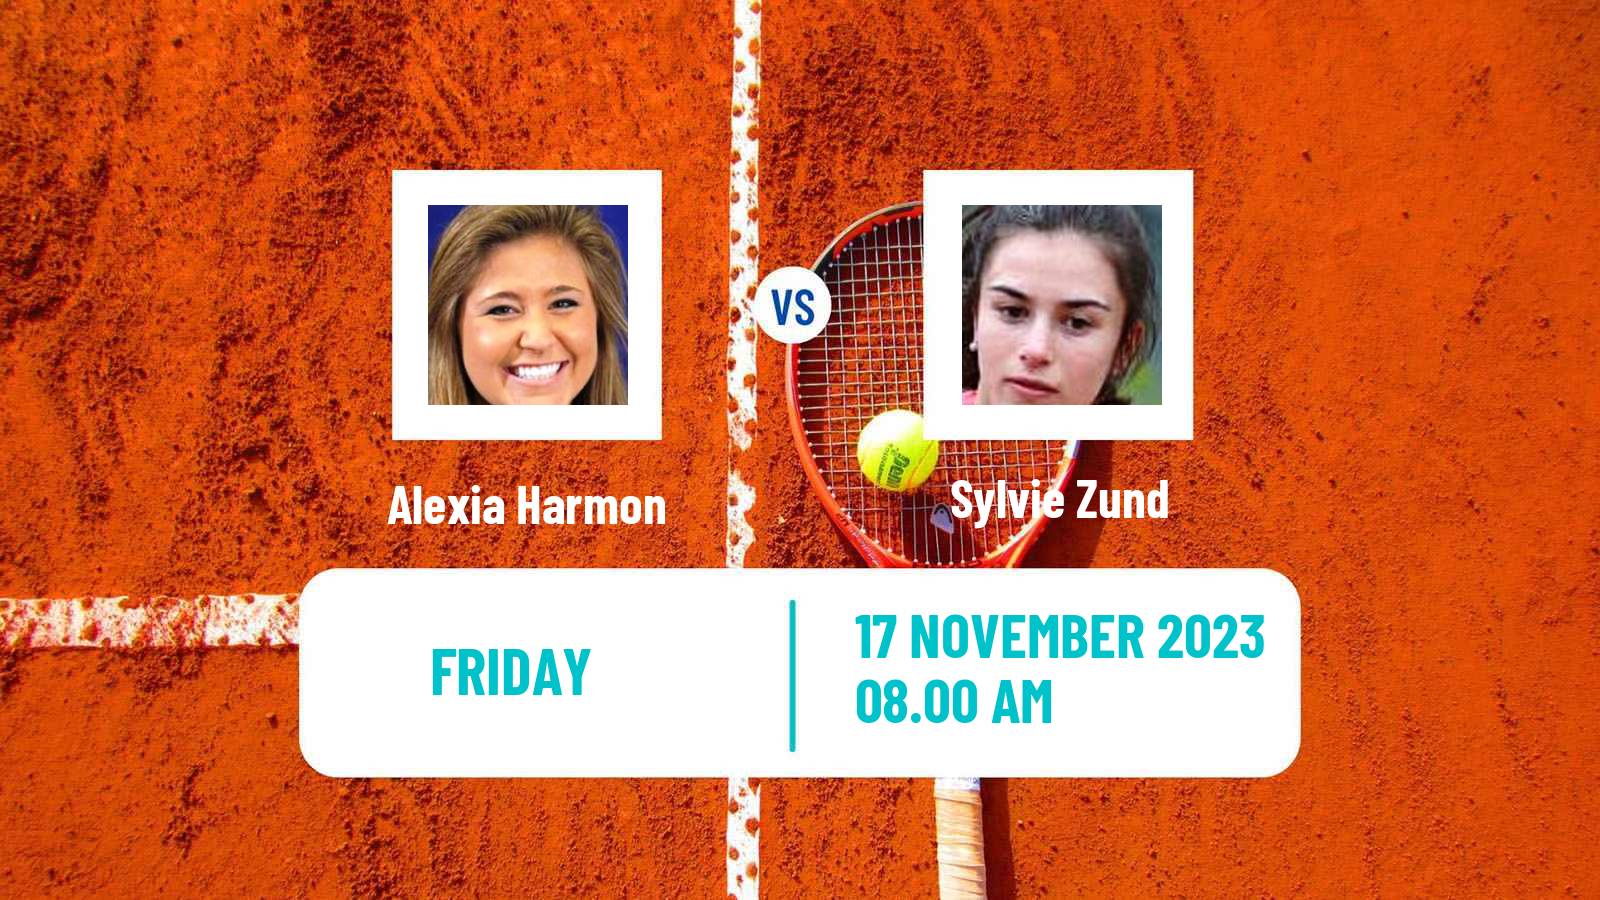 Tennis ITF W15 Buenos Aires 2 Women Alexia Harmon - Sylvie Zund